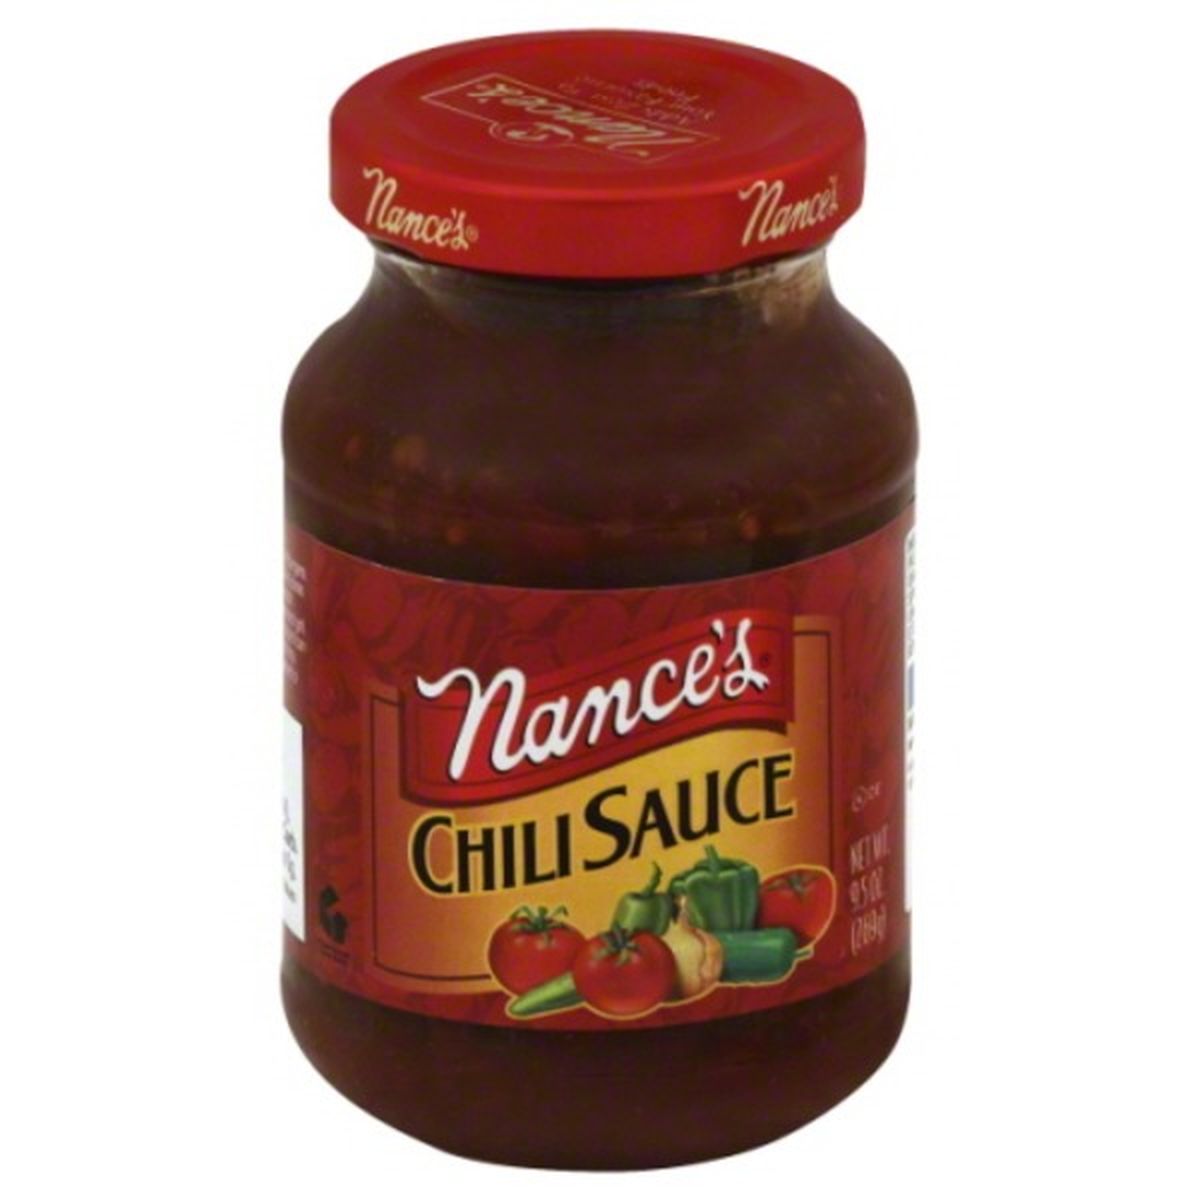 Calories in Nance's Chili Sauce